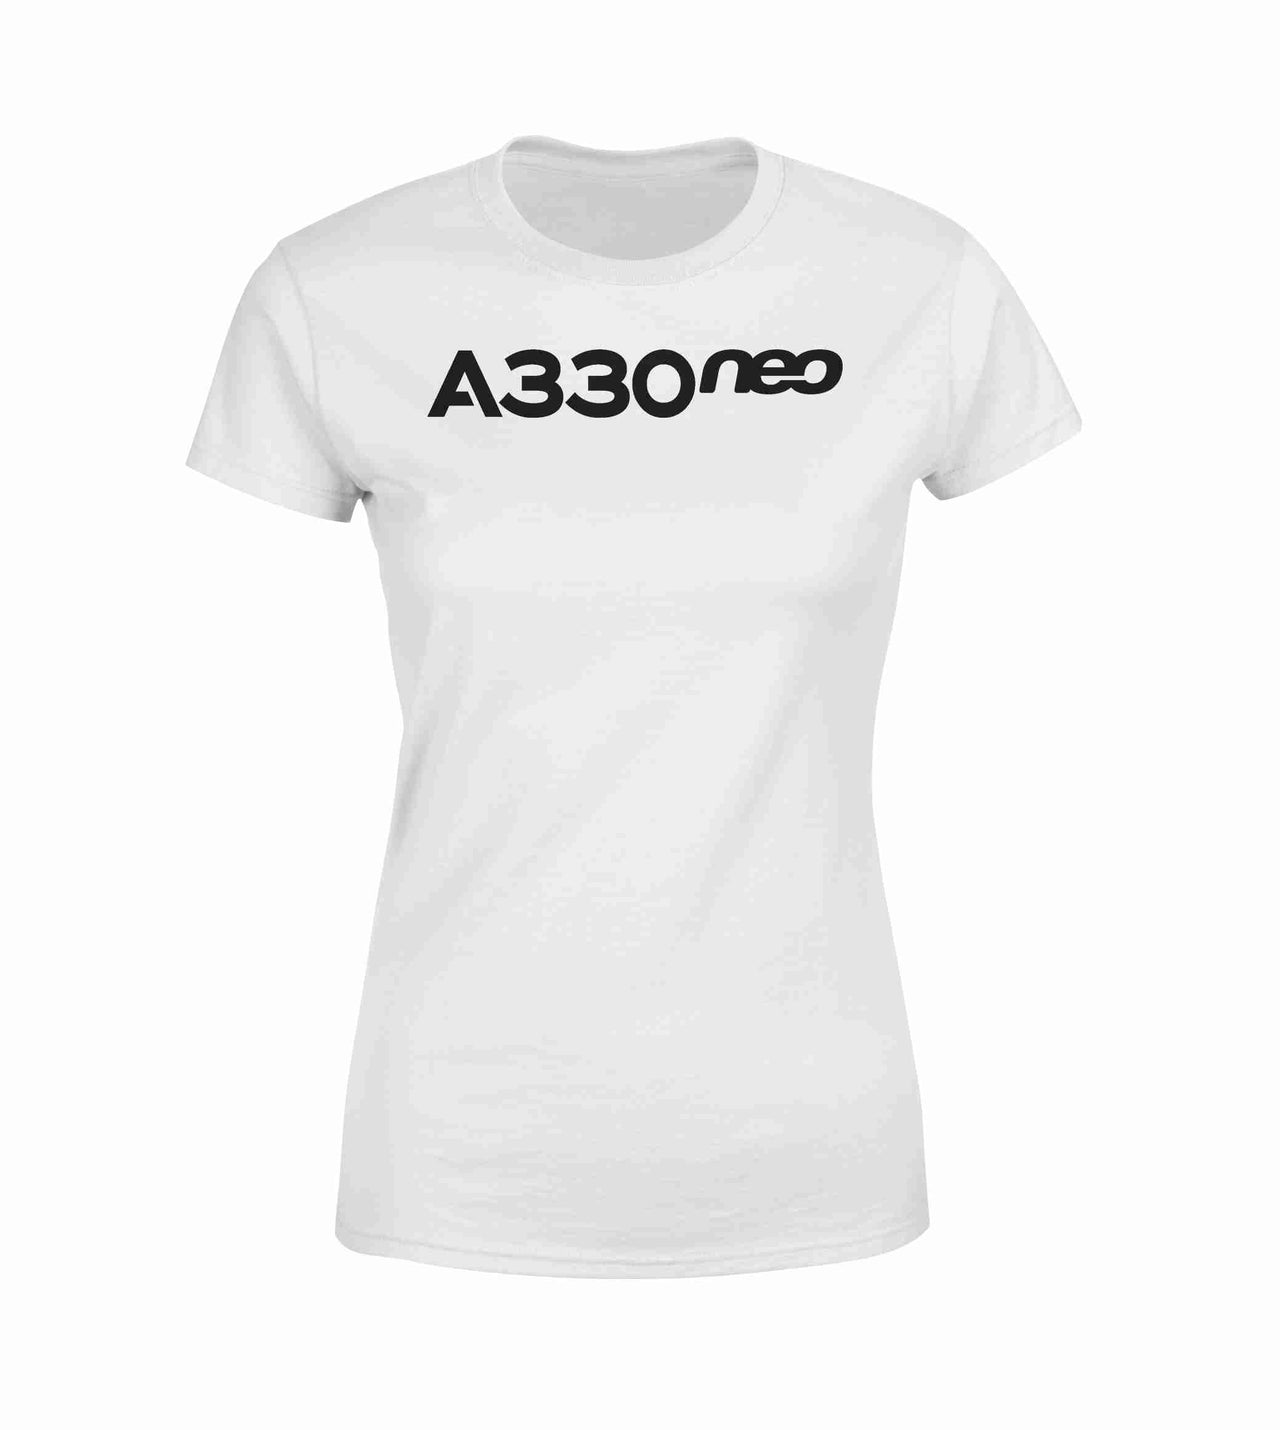 A330neo & Text Designed Women T-Shirts